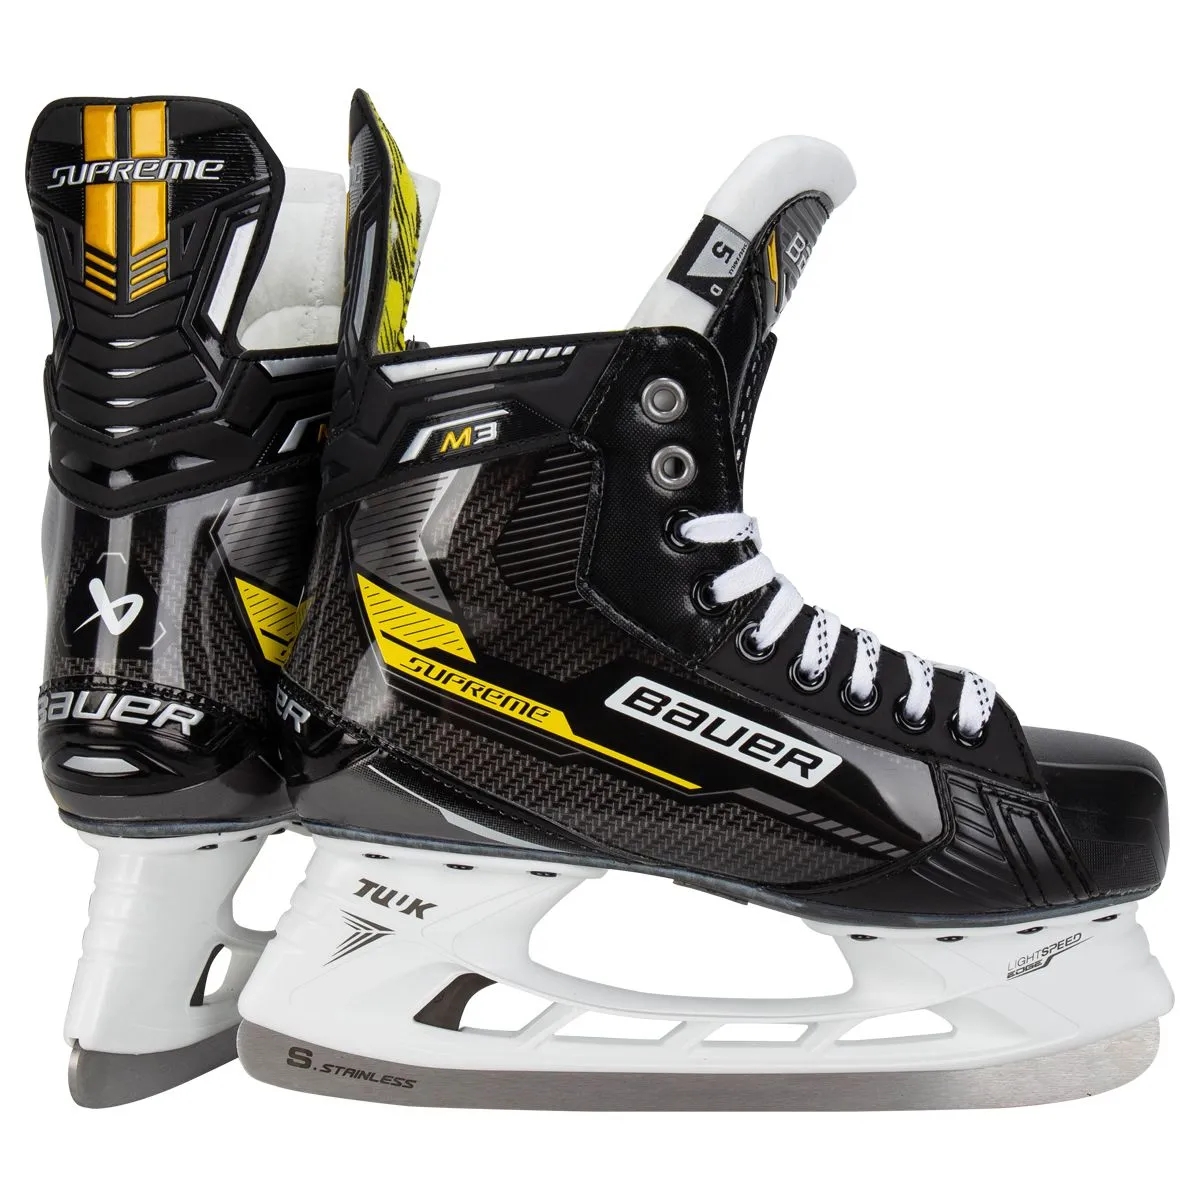 Bauer Supreme M3 Int. Hockey Skatesproduct zoom image #1